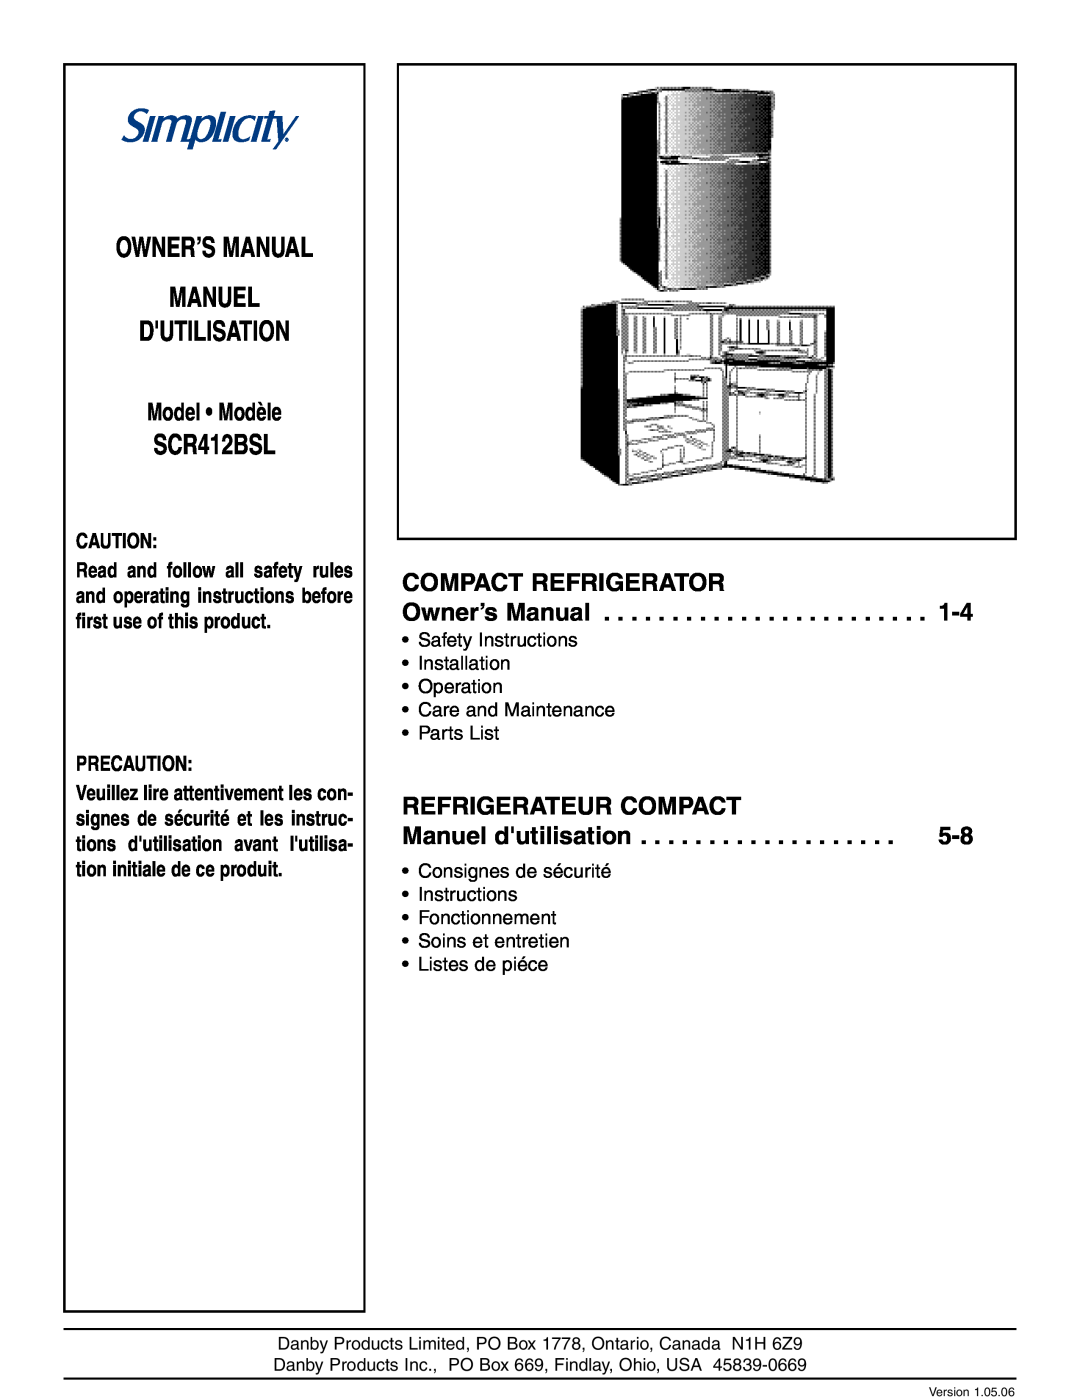 Simplicity SCR412BLS owner manual Owner’S Manual Manuel Dutilisation, SCR412BSL, Model Modèle, Precaution 